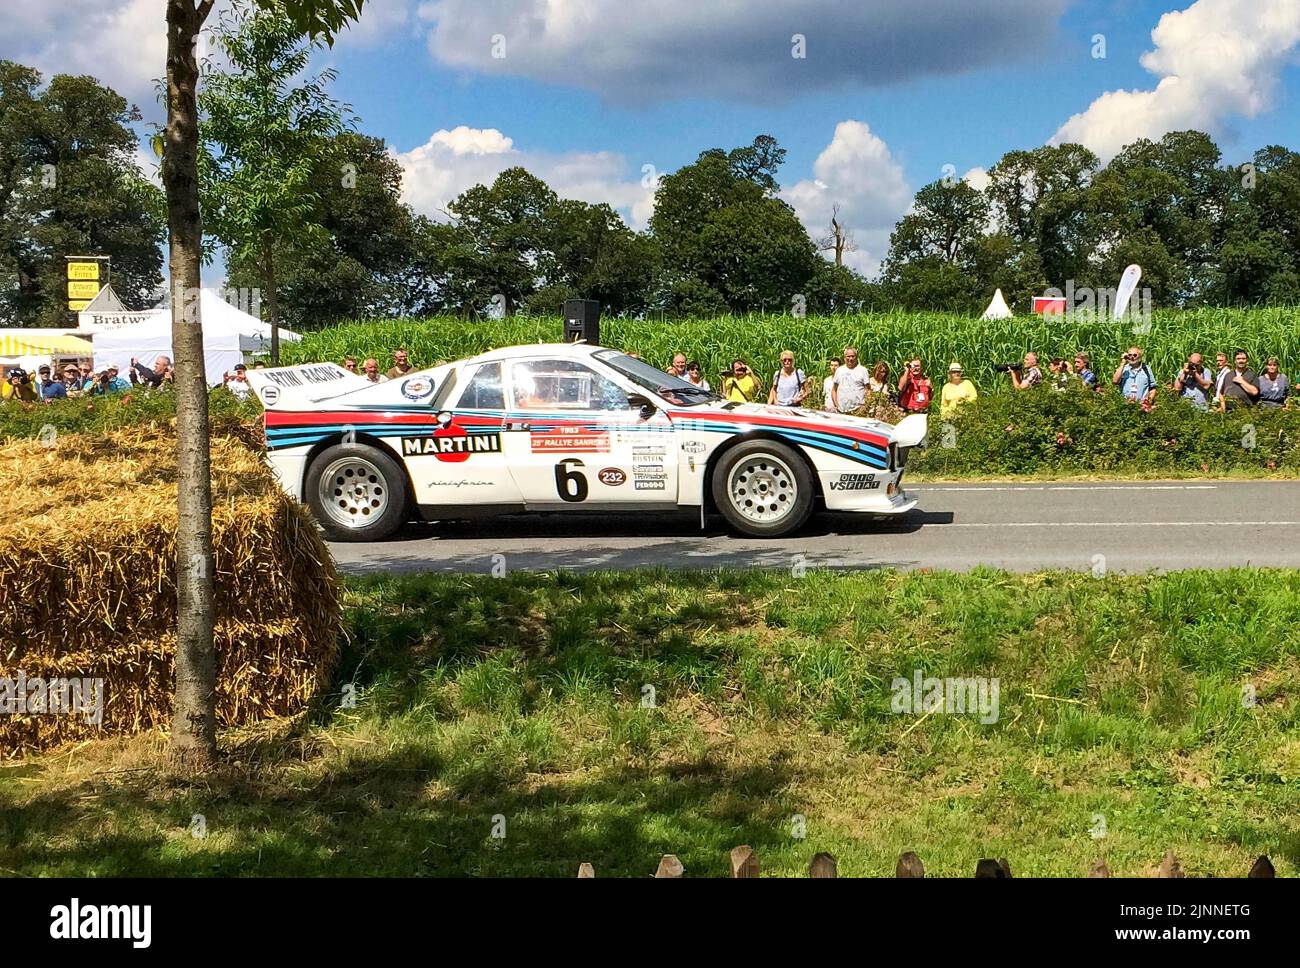 Oldtimer-Oldtimer Lancia Rally 037 Martini Rennen für Rallye Gruppe B beim Klassikerlauf, Fahrer Walter Rohrl, Schloss Dyck Stockfoto